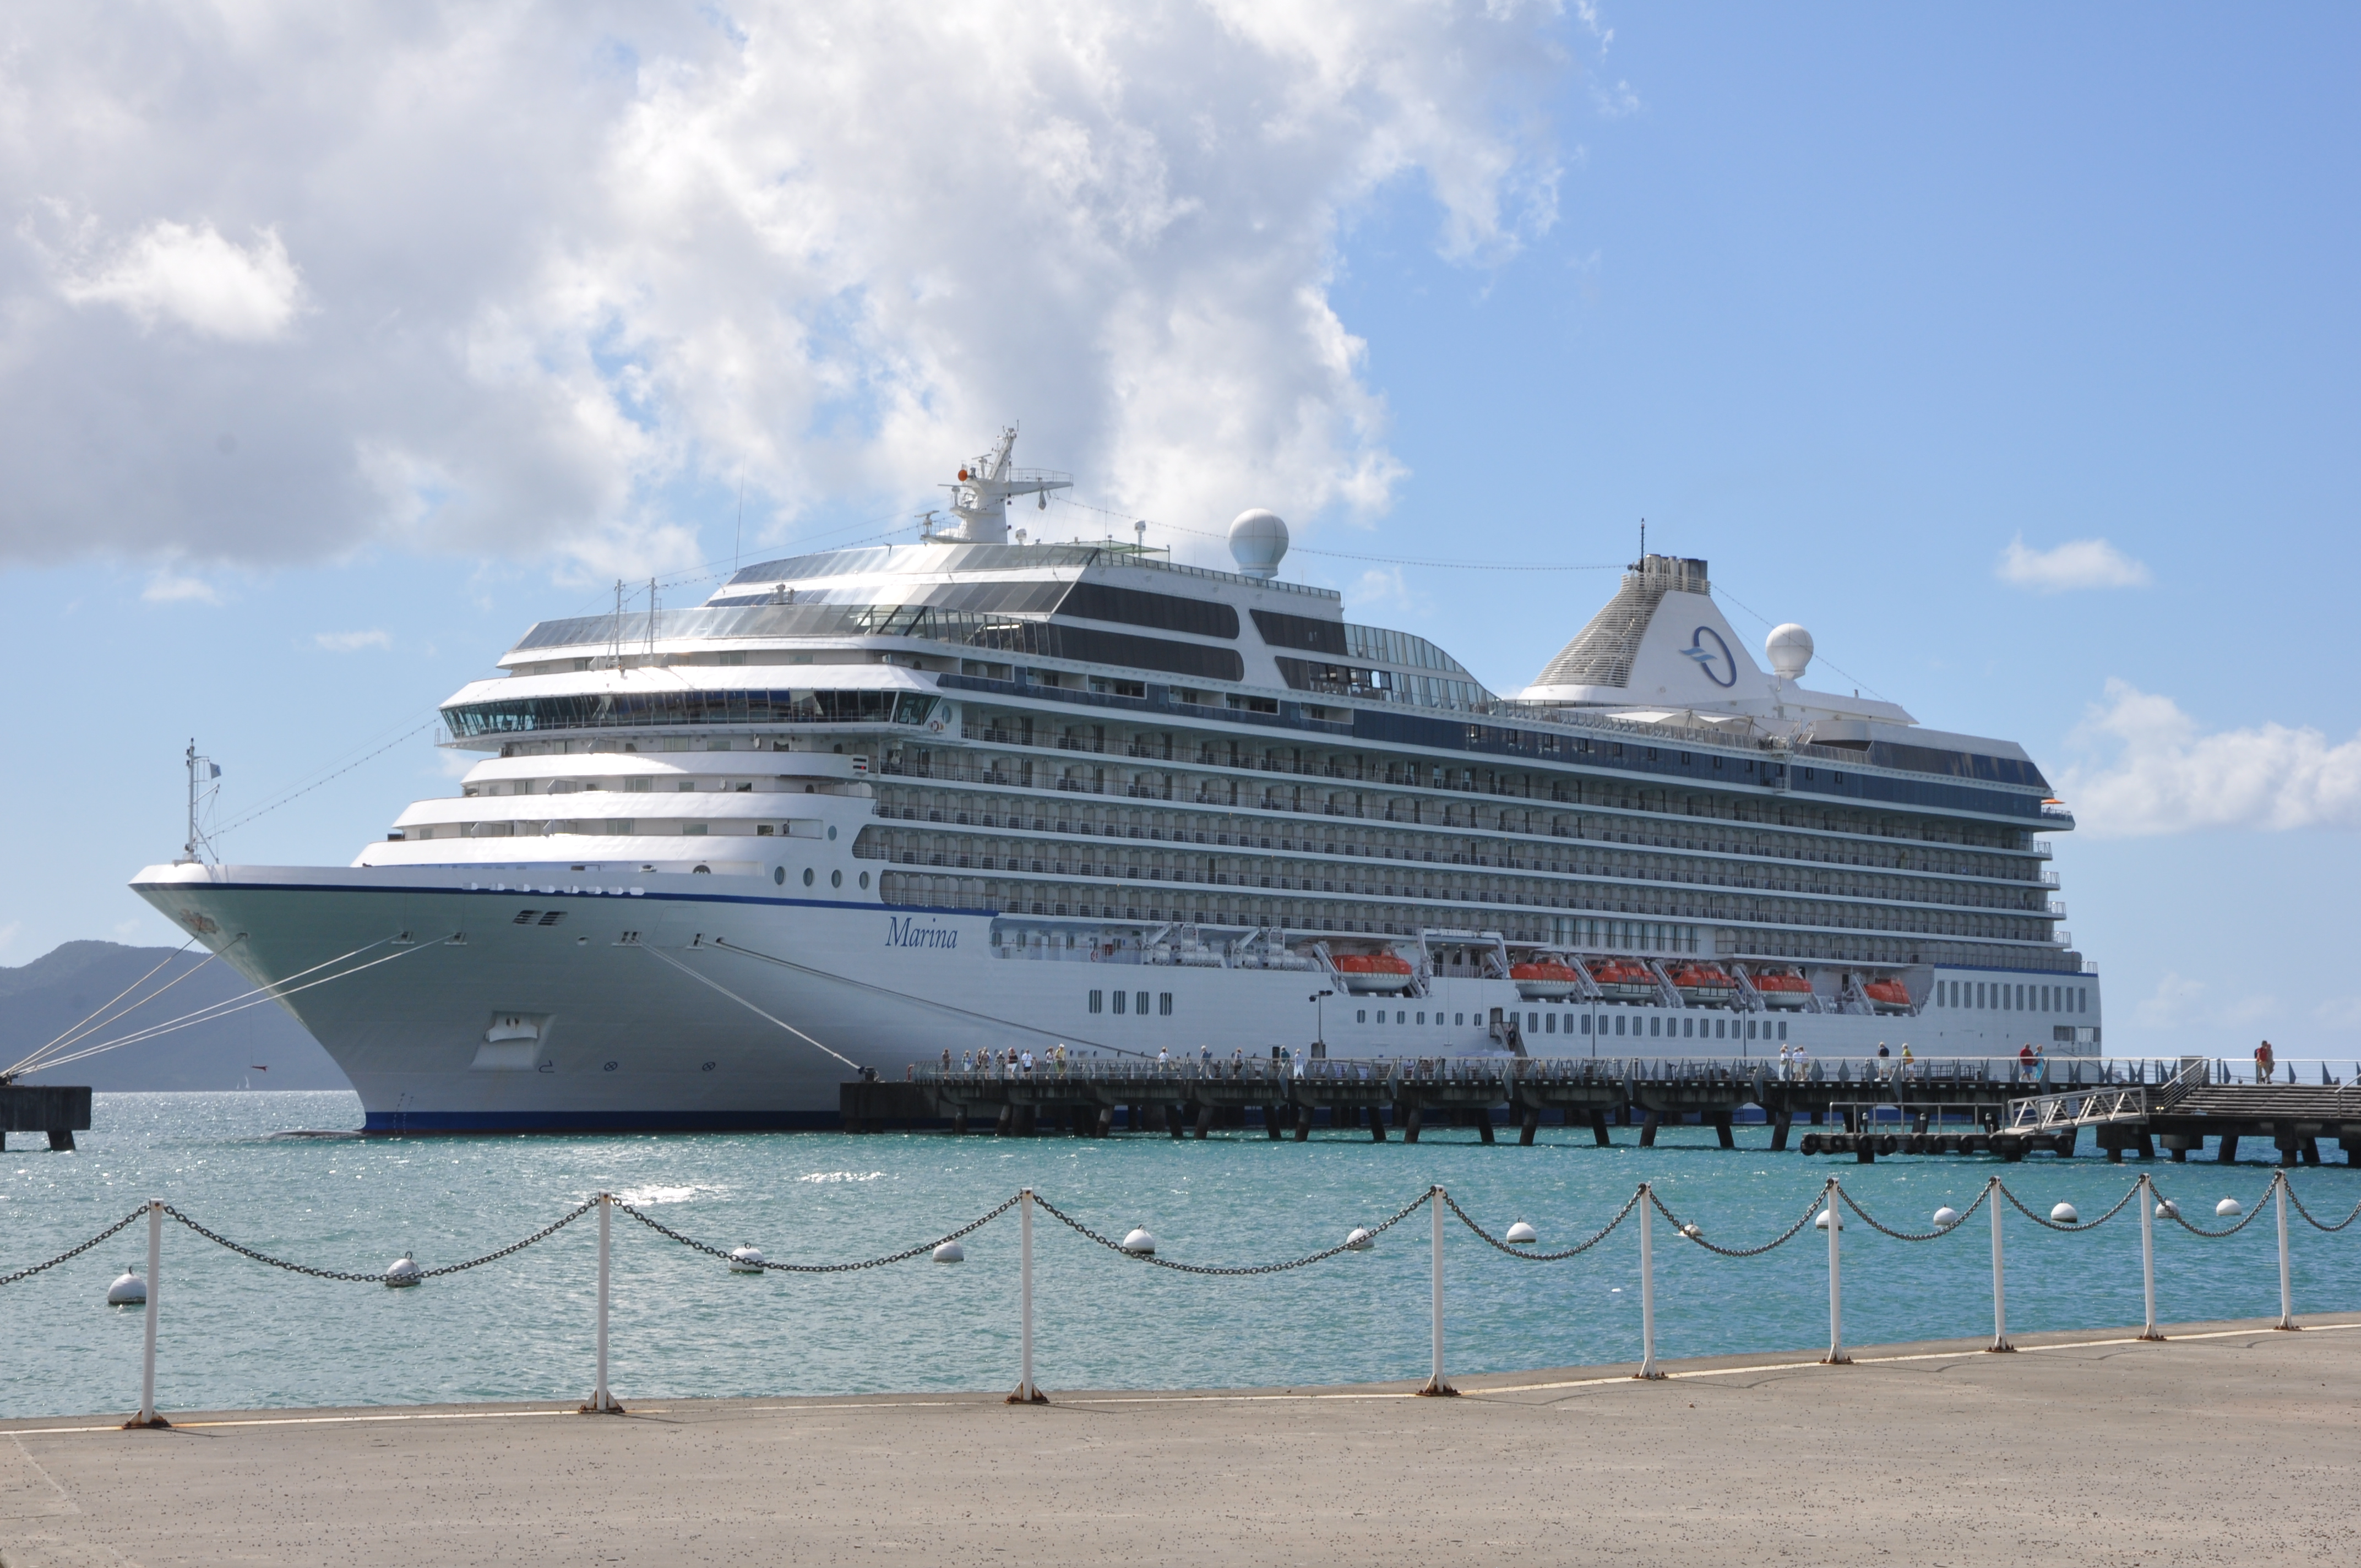 ms marina cruise ship image courtesy of Oceania